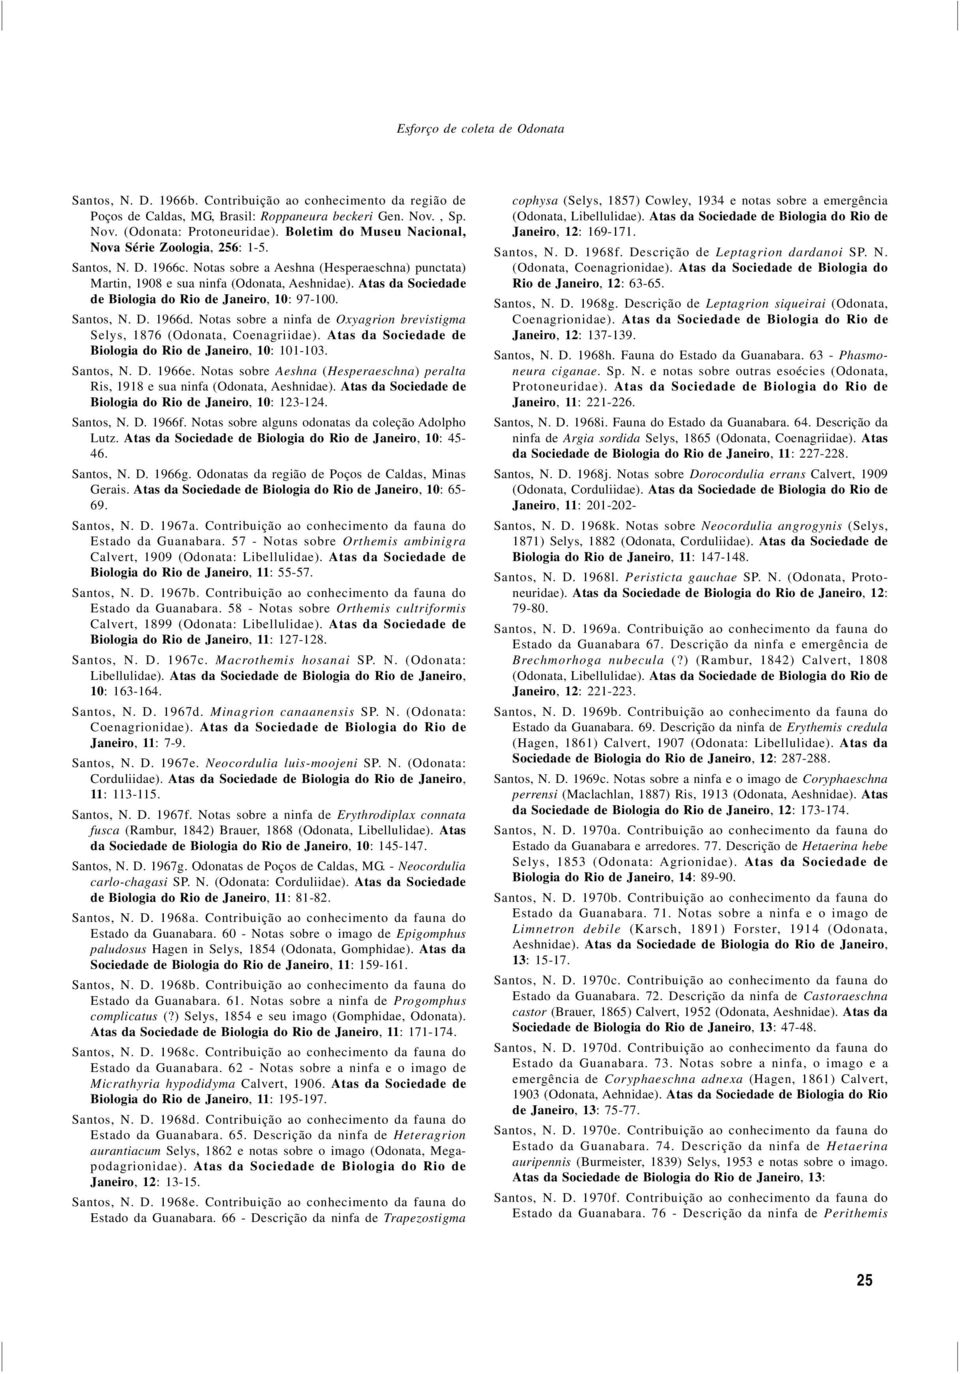 Atas da Sociedade de Biologia do Rio de Janeiro, 10: 97-100. Santos, N. D. 1966d. Notas sobre a ninfa de Oxyagrion brevistigma Selys, 1876 (Odonata, Coenagriidae).